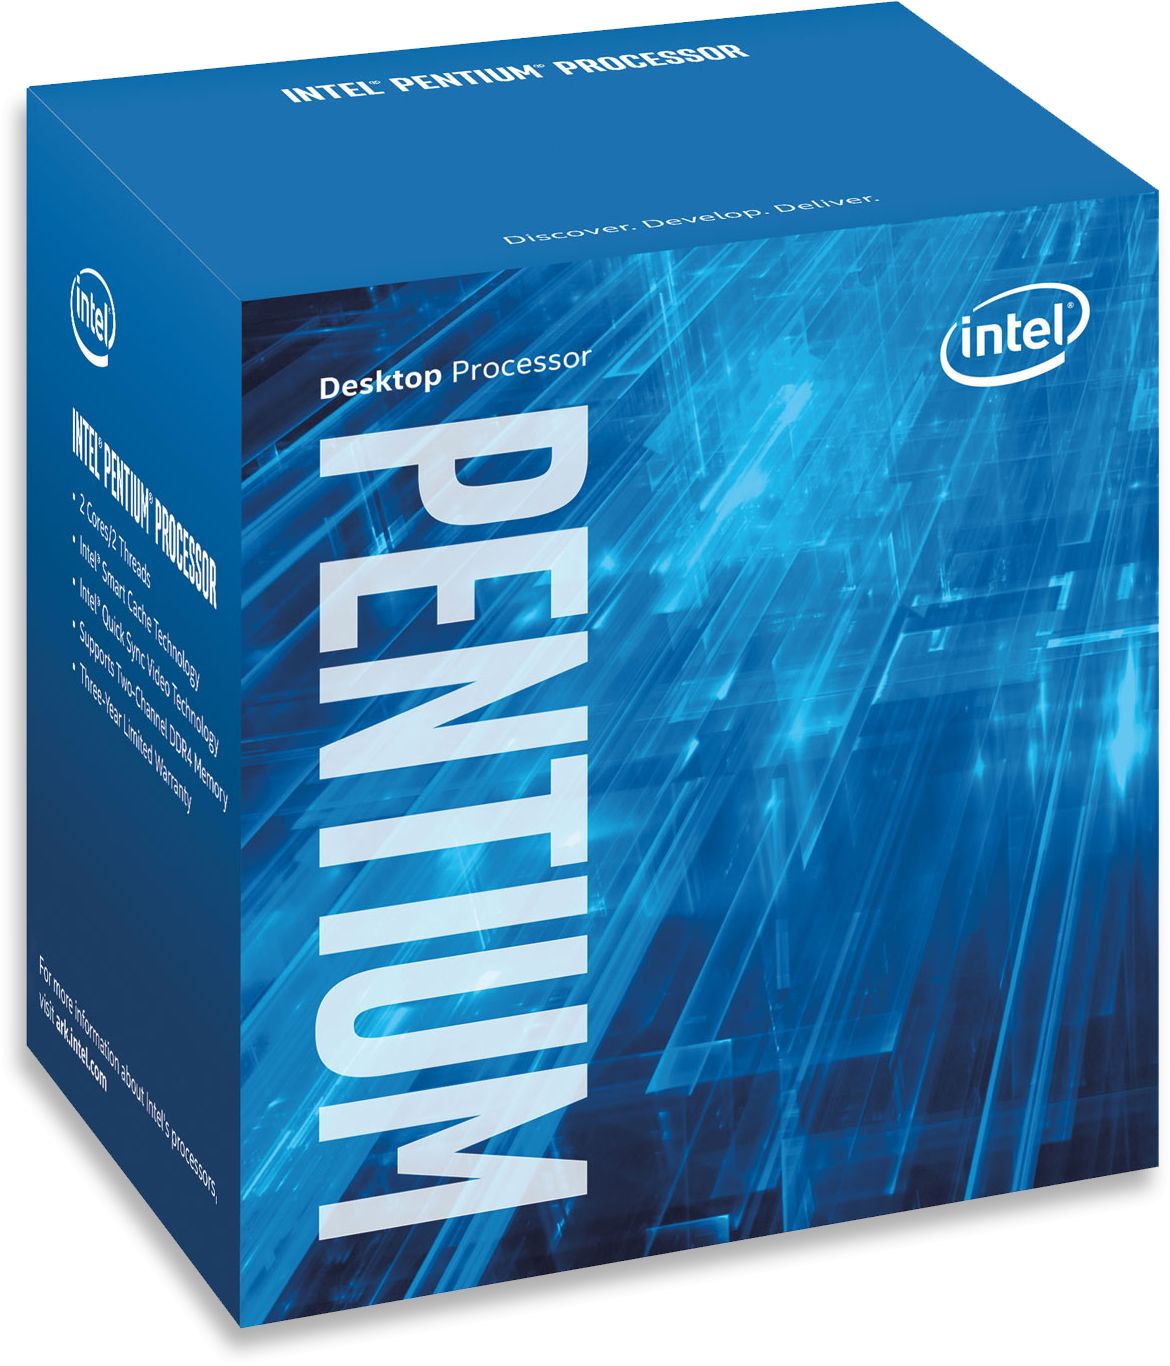 Intel Skylake 6th Generation Pentium